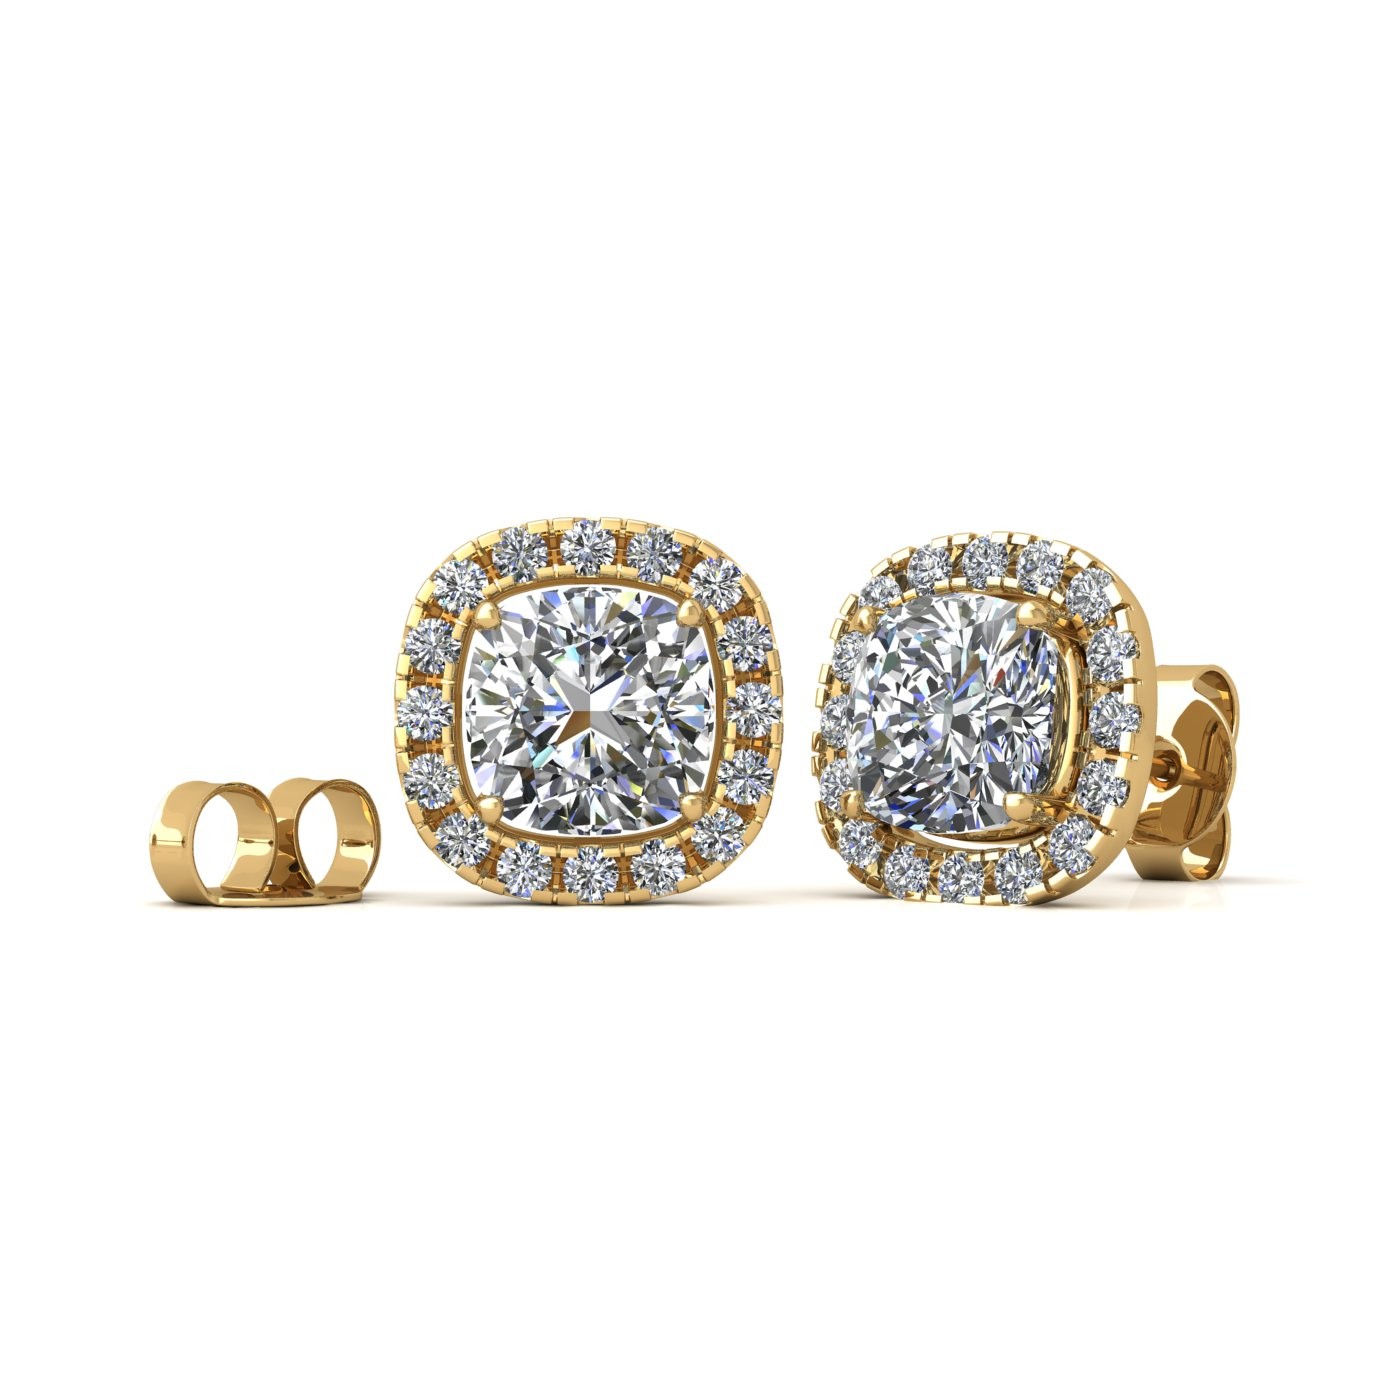 18k yellow gold  0,7 ct each (1,4 tcw) 4 prongs cushion shape diamond earrings with diamond pavÉ set halo